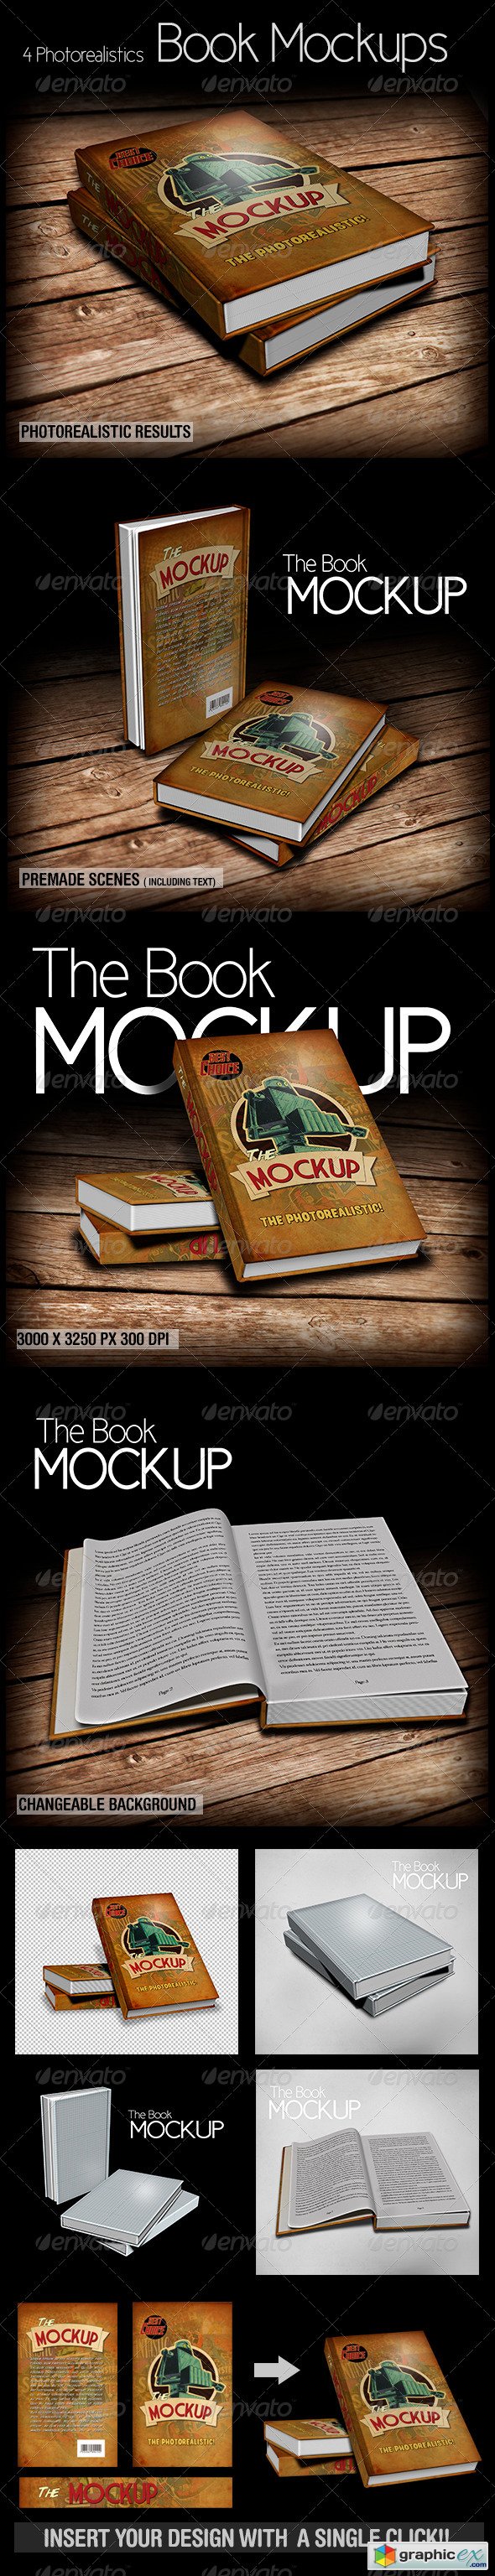 The Book Mockup